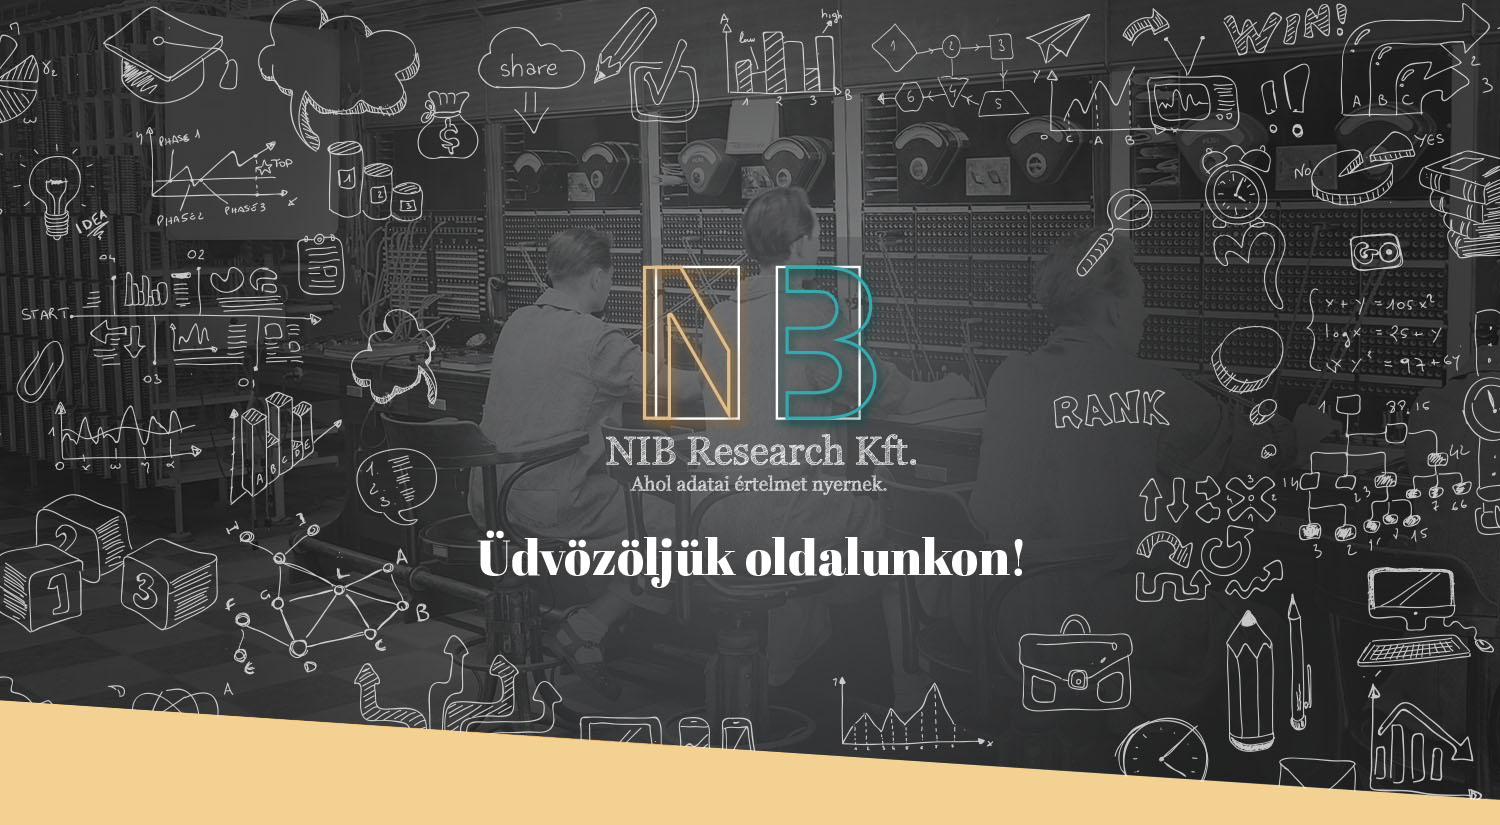 NIB research